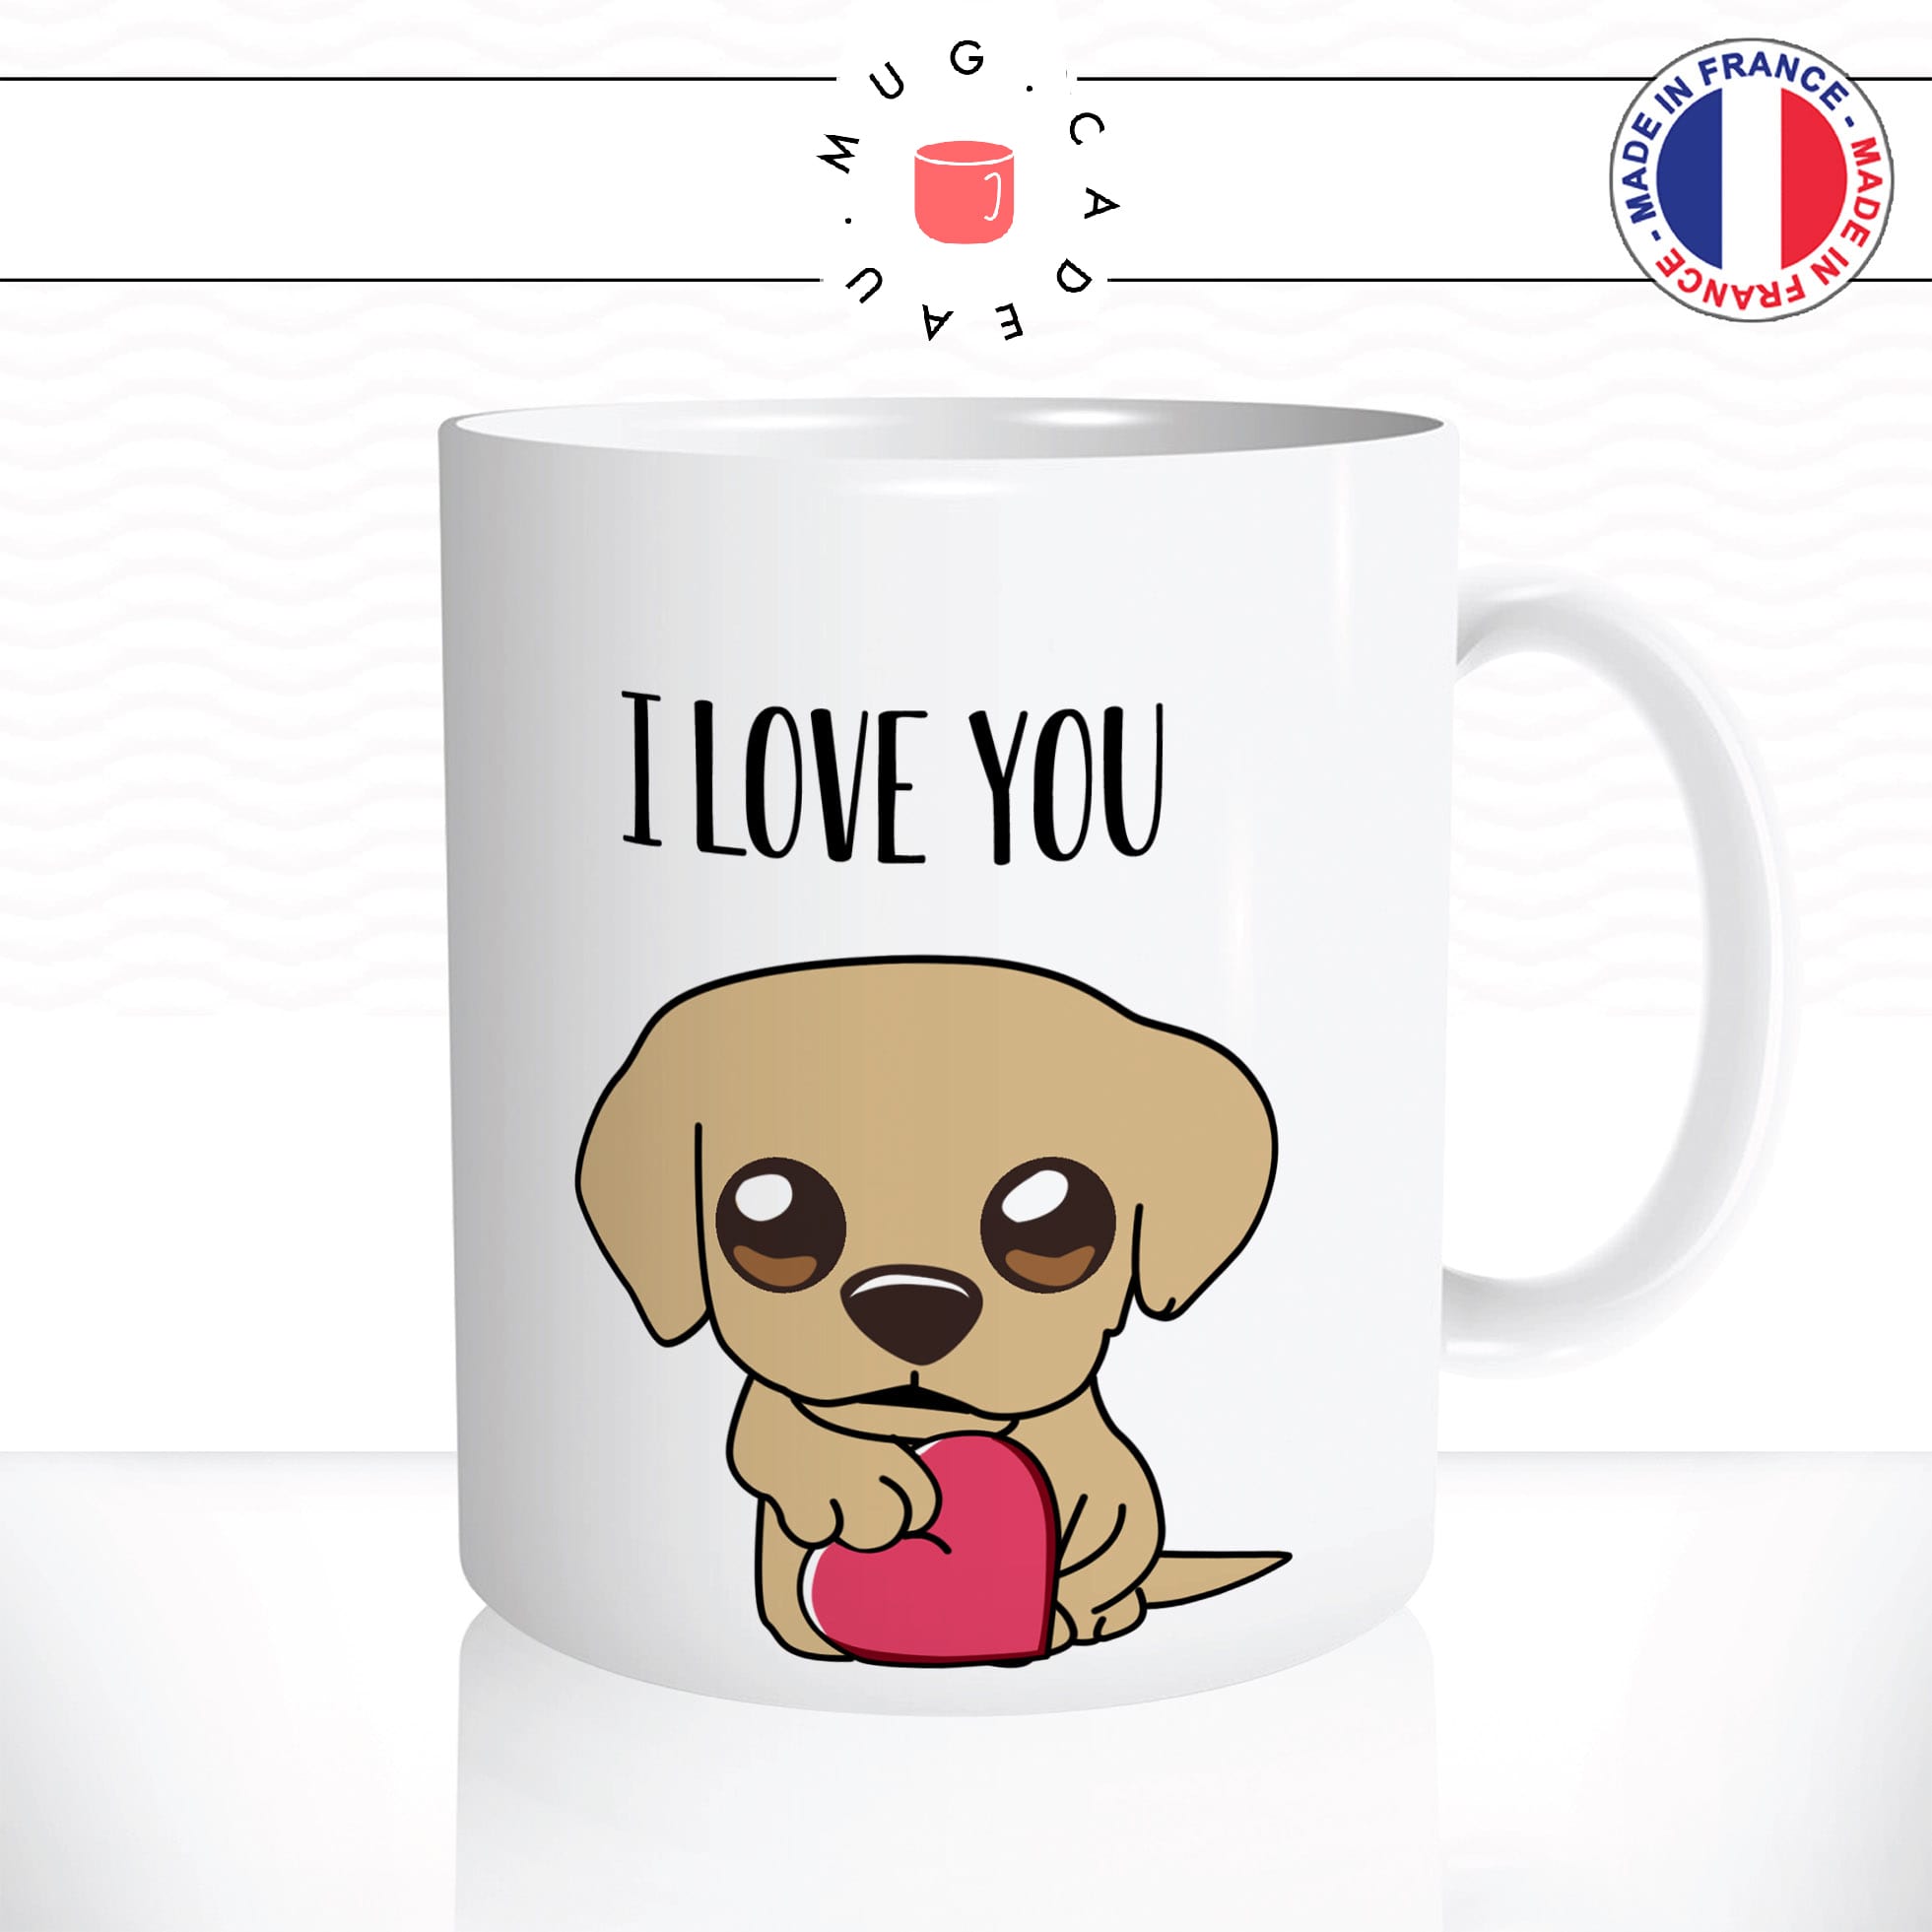 mug-tasse-chien-chiot-dog-coeur-kawaii-i-love-you-amour-drole-mignon-fun-cool-animal-dessin-original-café-thé-idée-cadeau-personnalisé